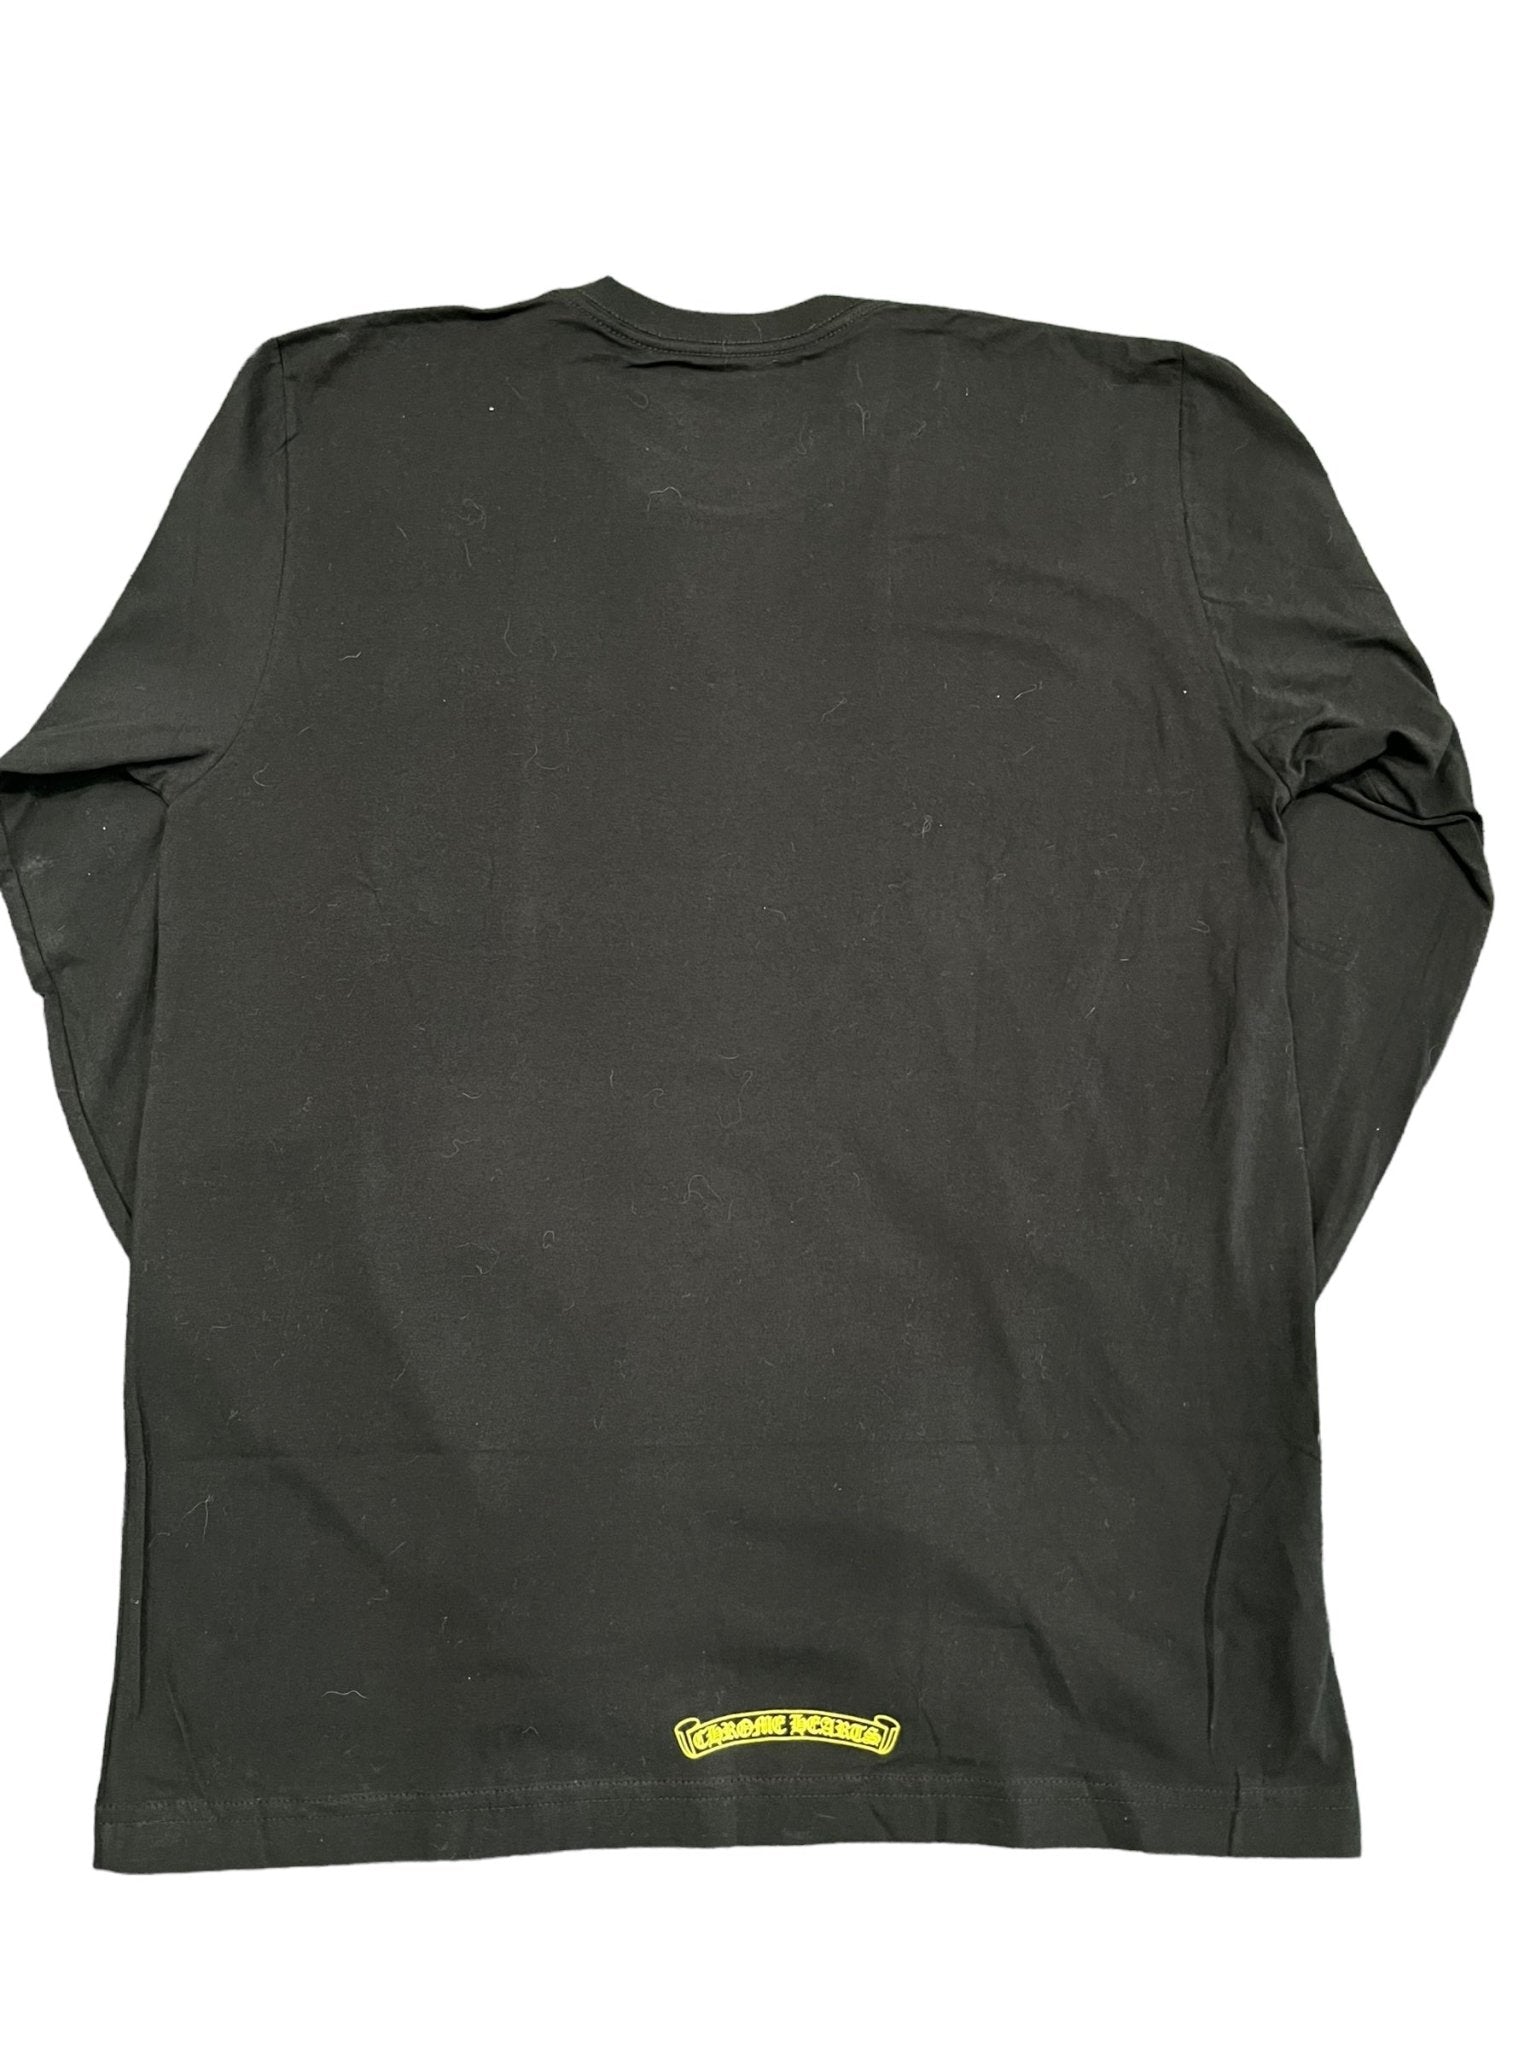 Chrome Hearts Neck Scroll Logo L/S T-shirt Black Green - Supra Sneakers